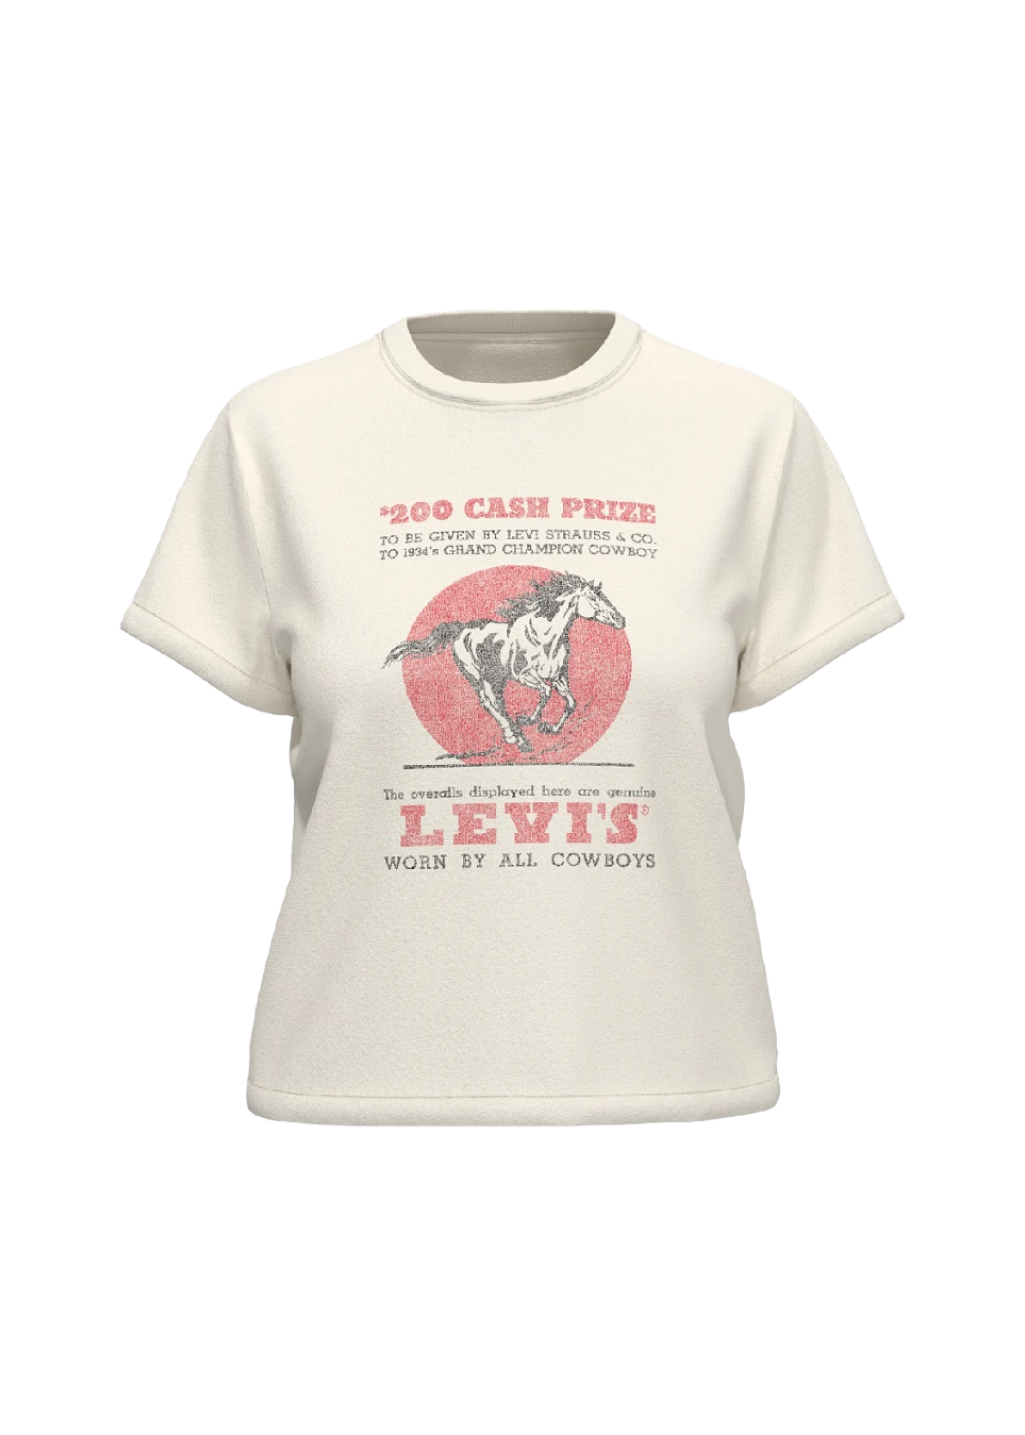 Levi's - Graphic Classic Tee - Camp Out Cloud Dancer - Hardpressed Print Studio Inc.